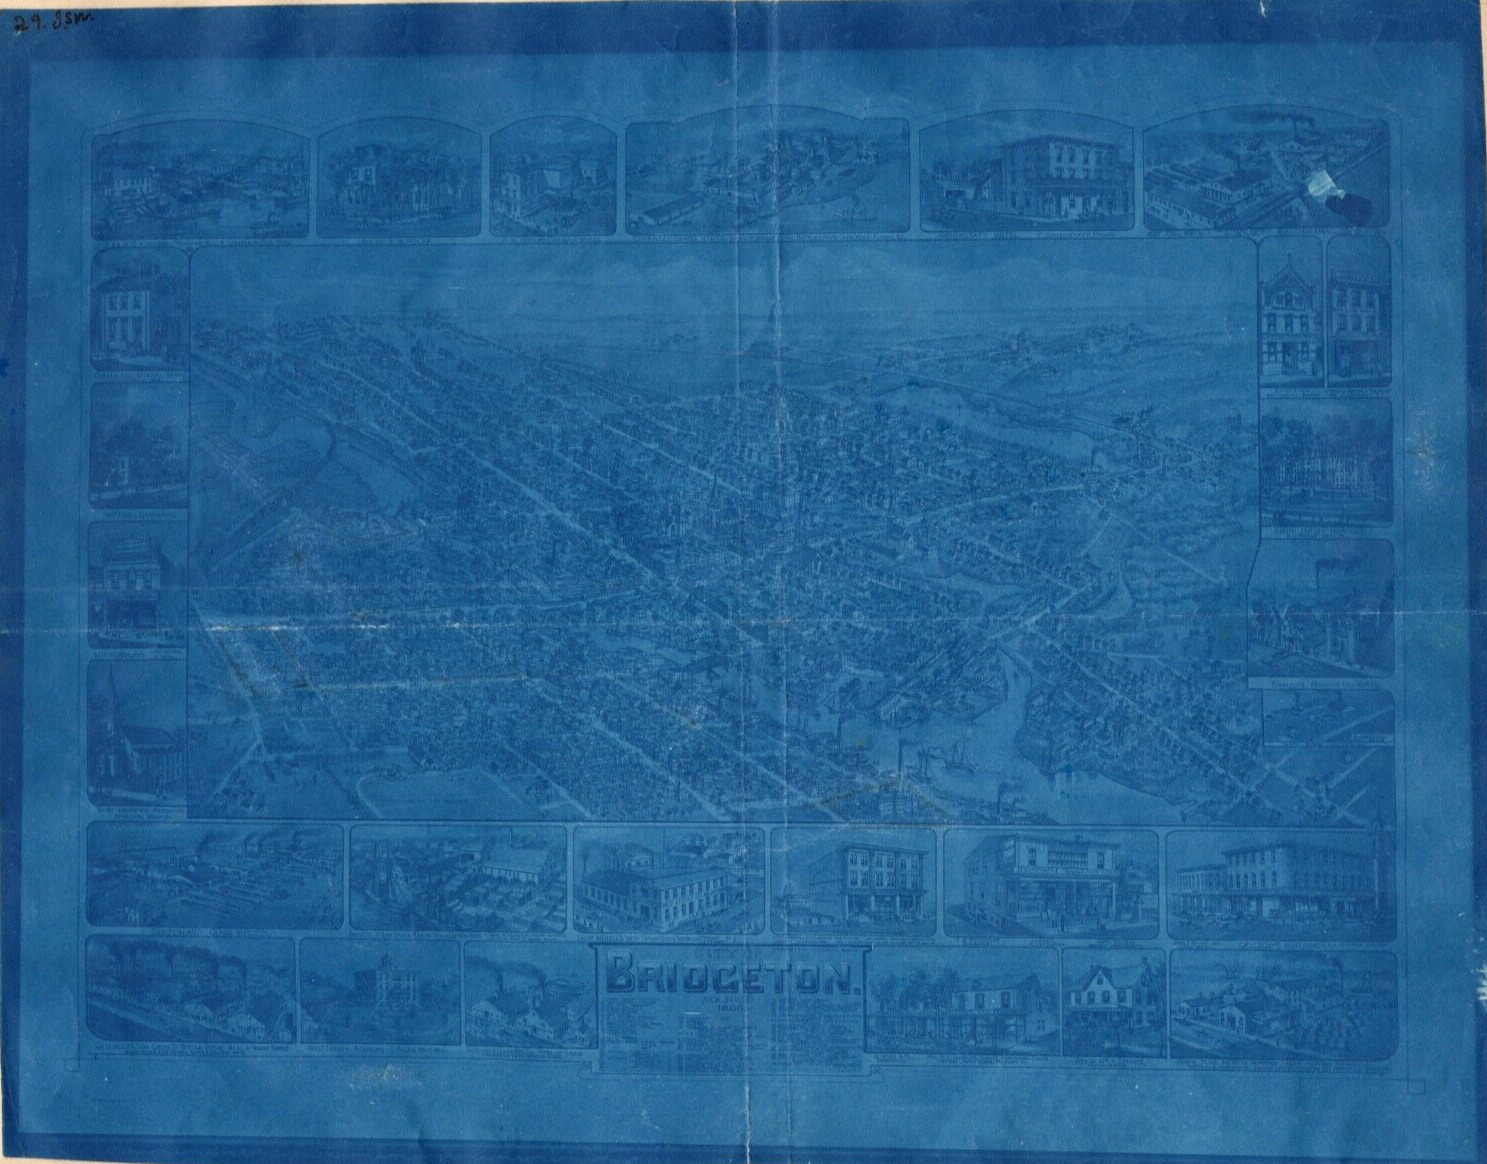 Bridgton New Jersey Unusual Cyanotype Photo of A 1886 Map of Bridgton NJ